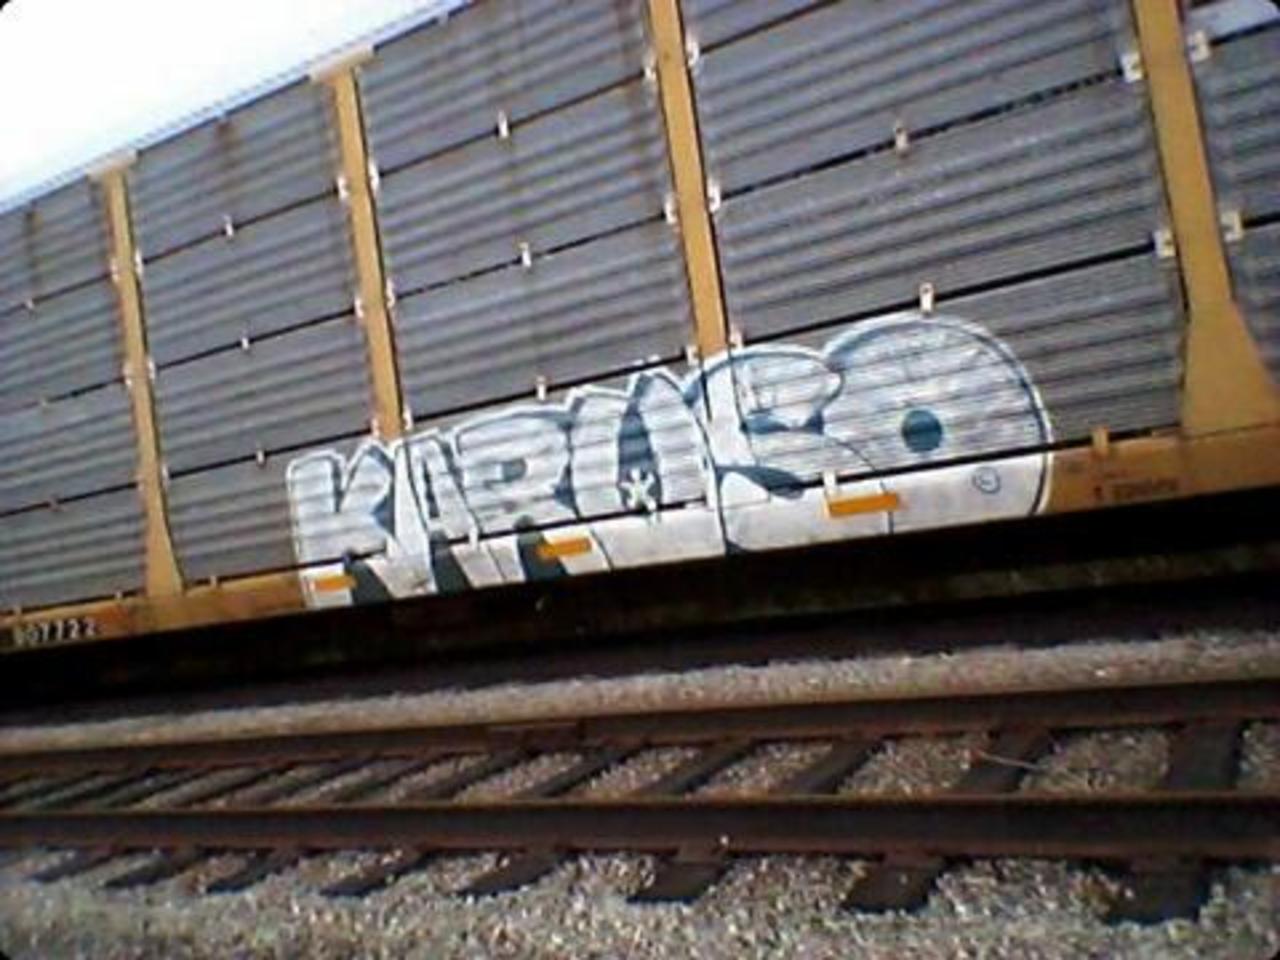 RT @OntarioGraff: Karuso throwie #ONGraff #graff #graffiti #throwie #throwup #streetart #urbanart #traingraffiti #welovebombing http://t.co/SE1bzJvQGb